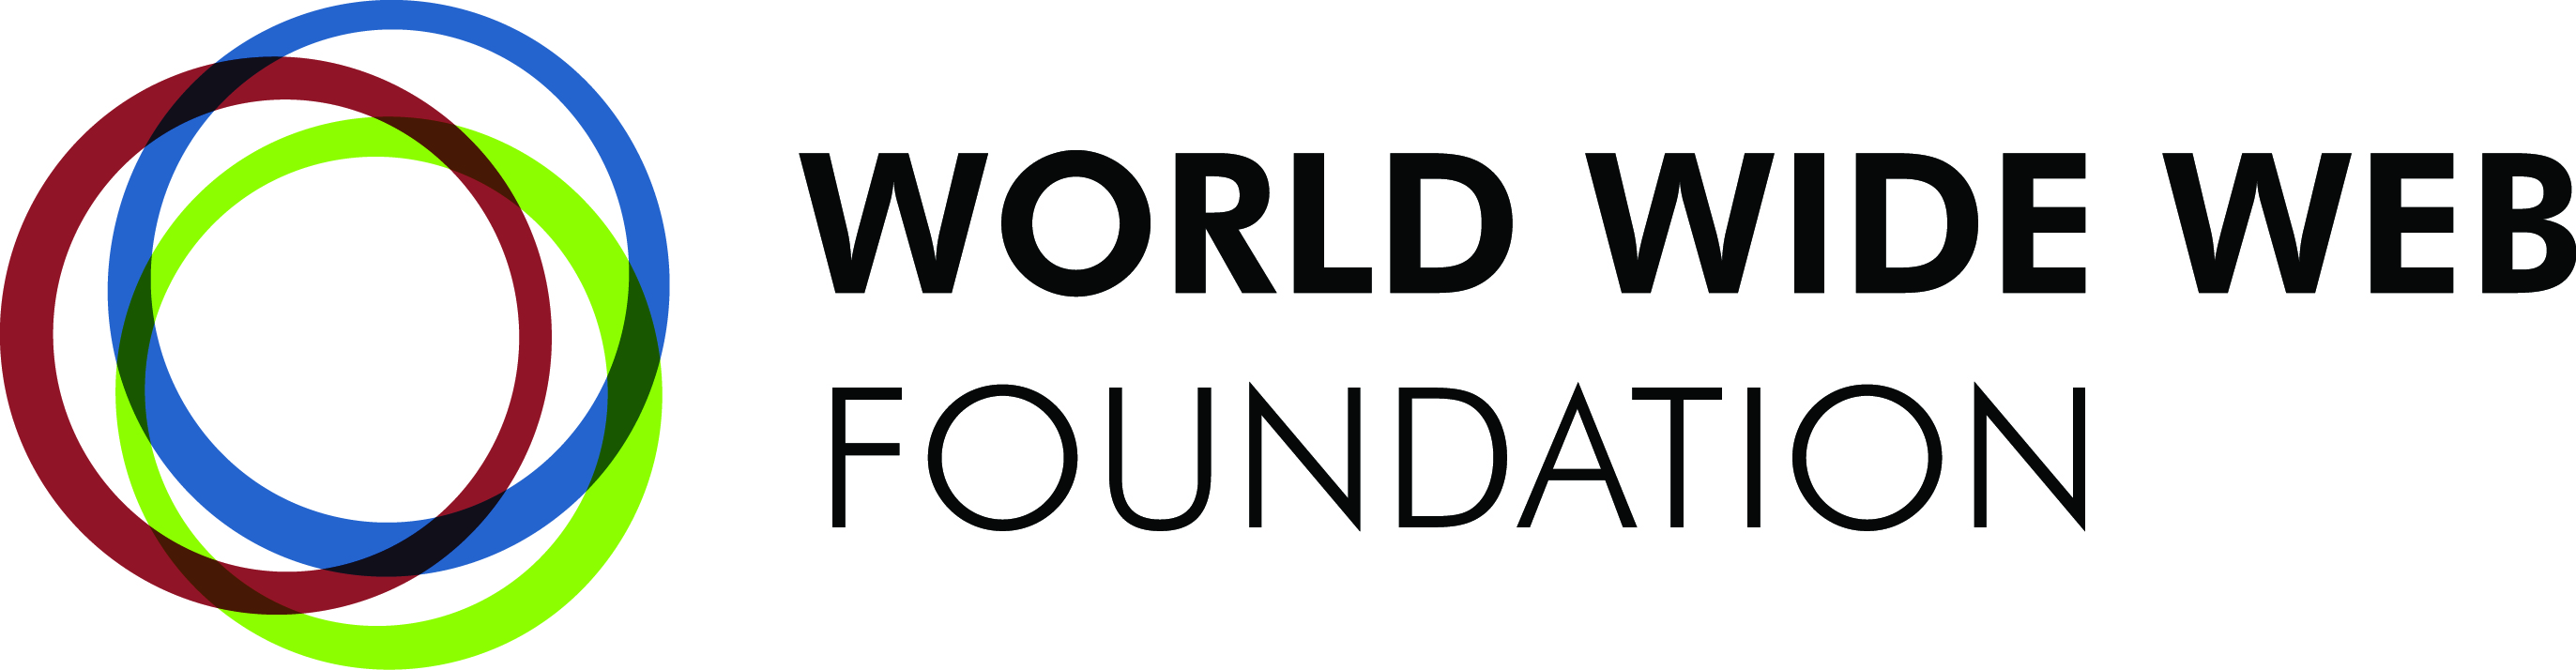 Web Foundation Hi Res logo 1